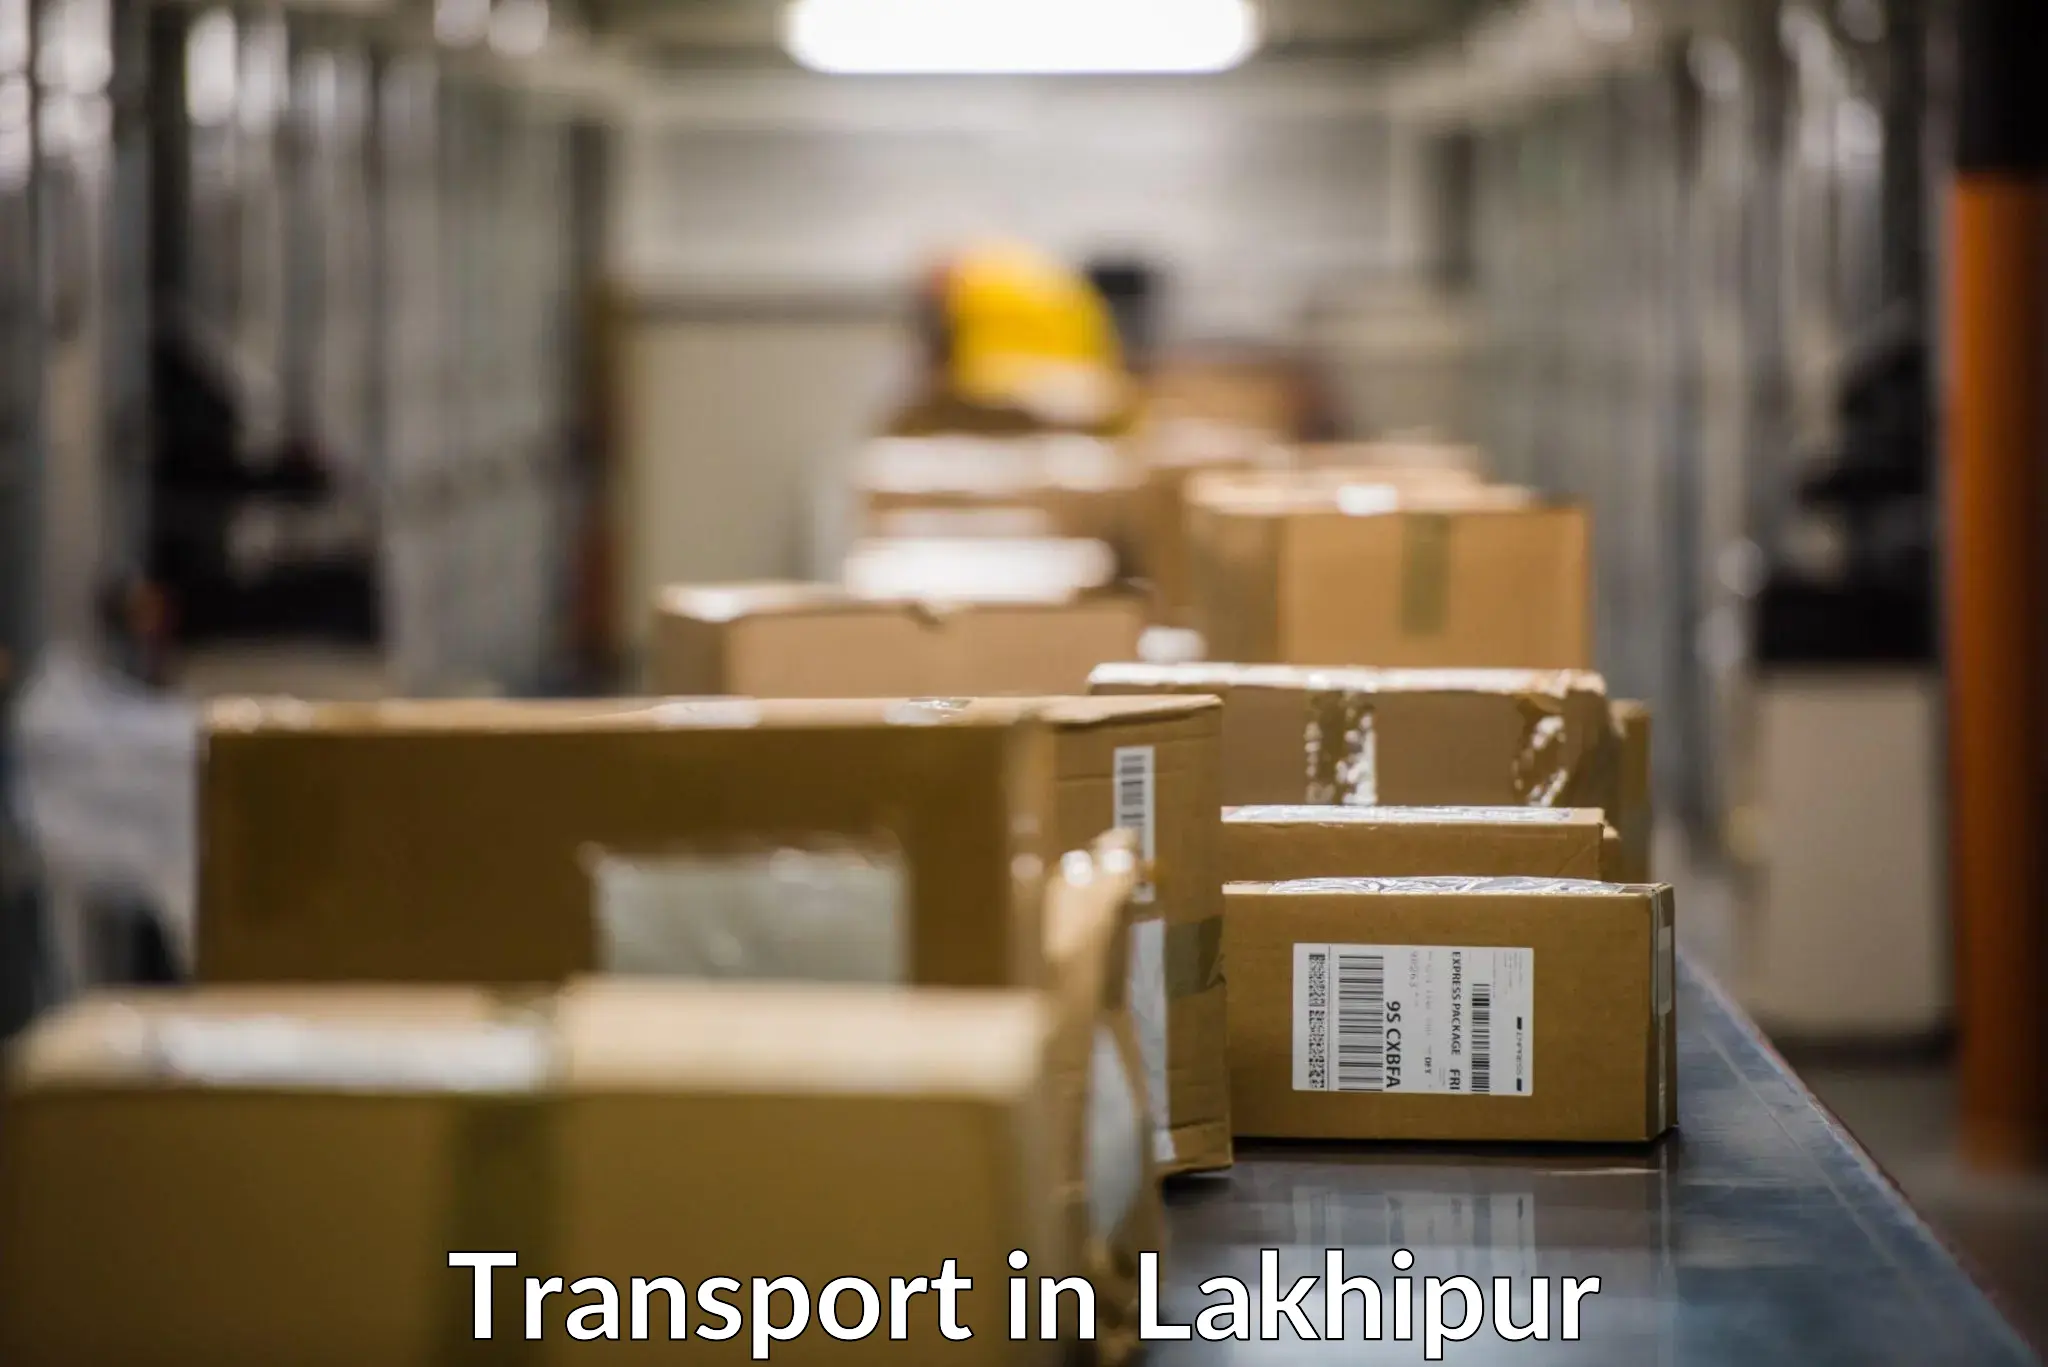 Online transport booking in Lakhipur